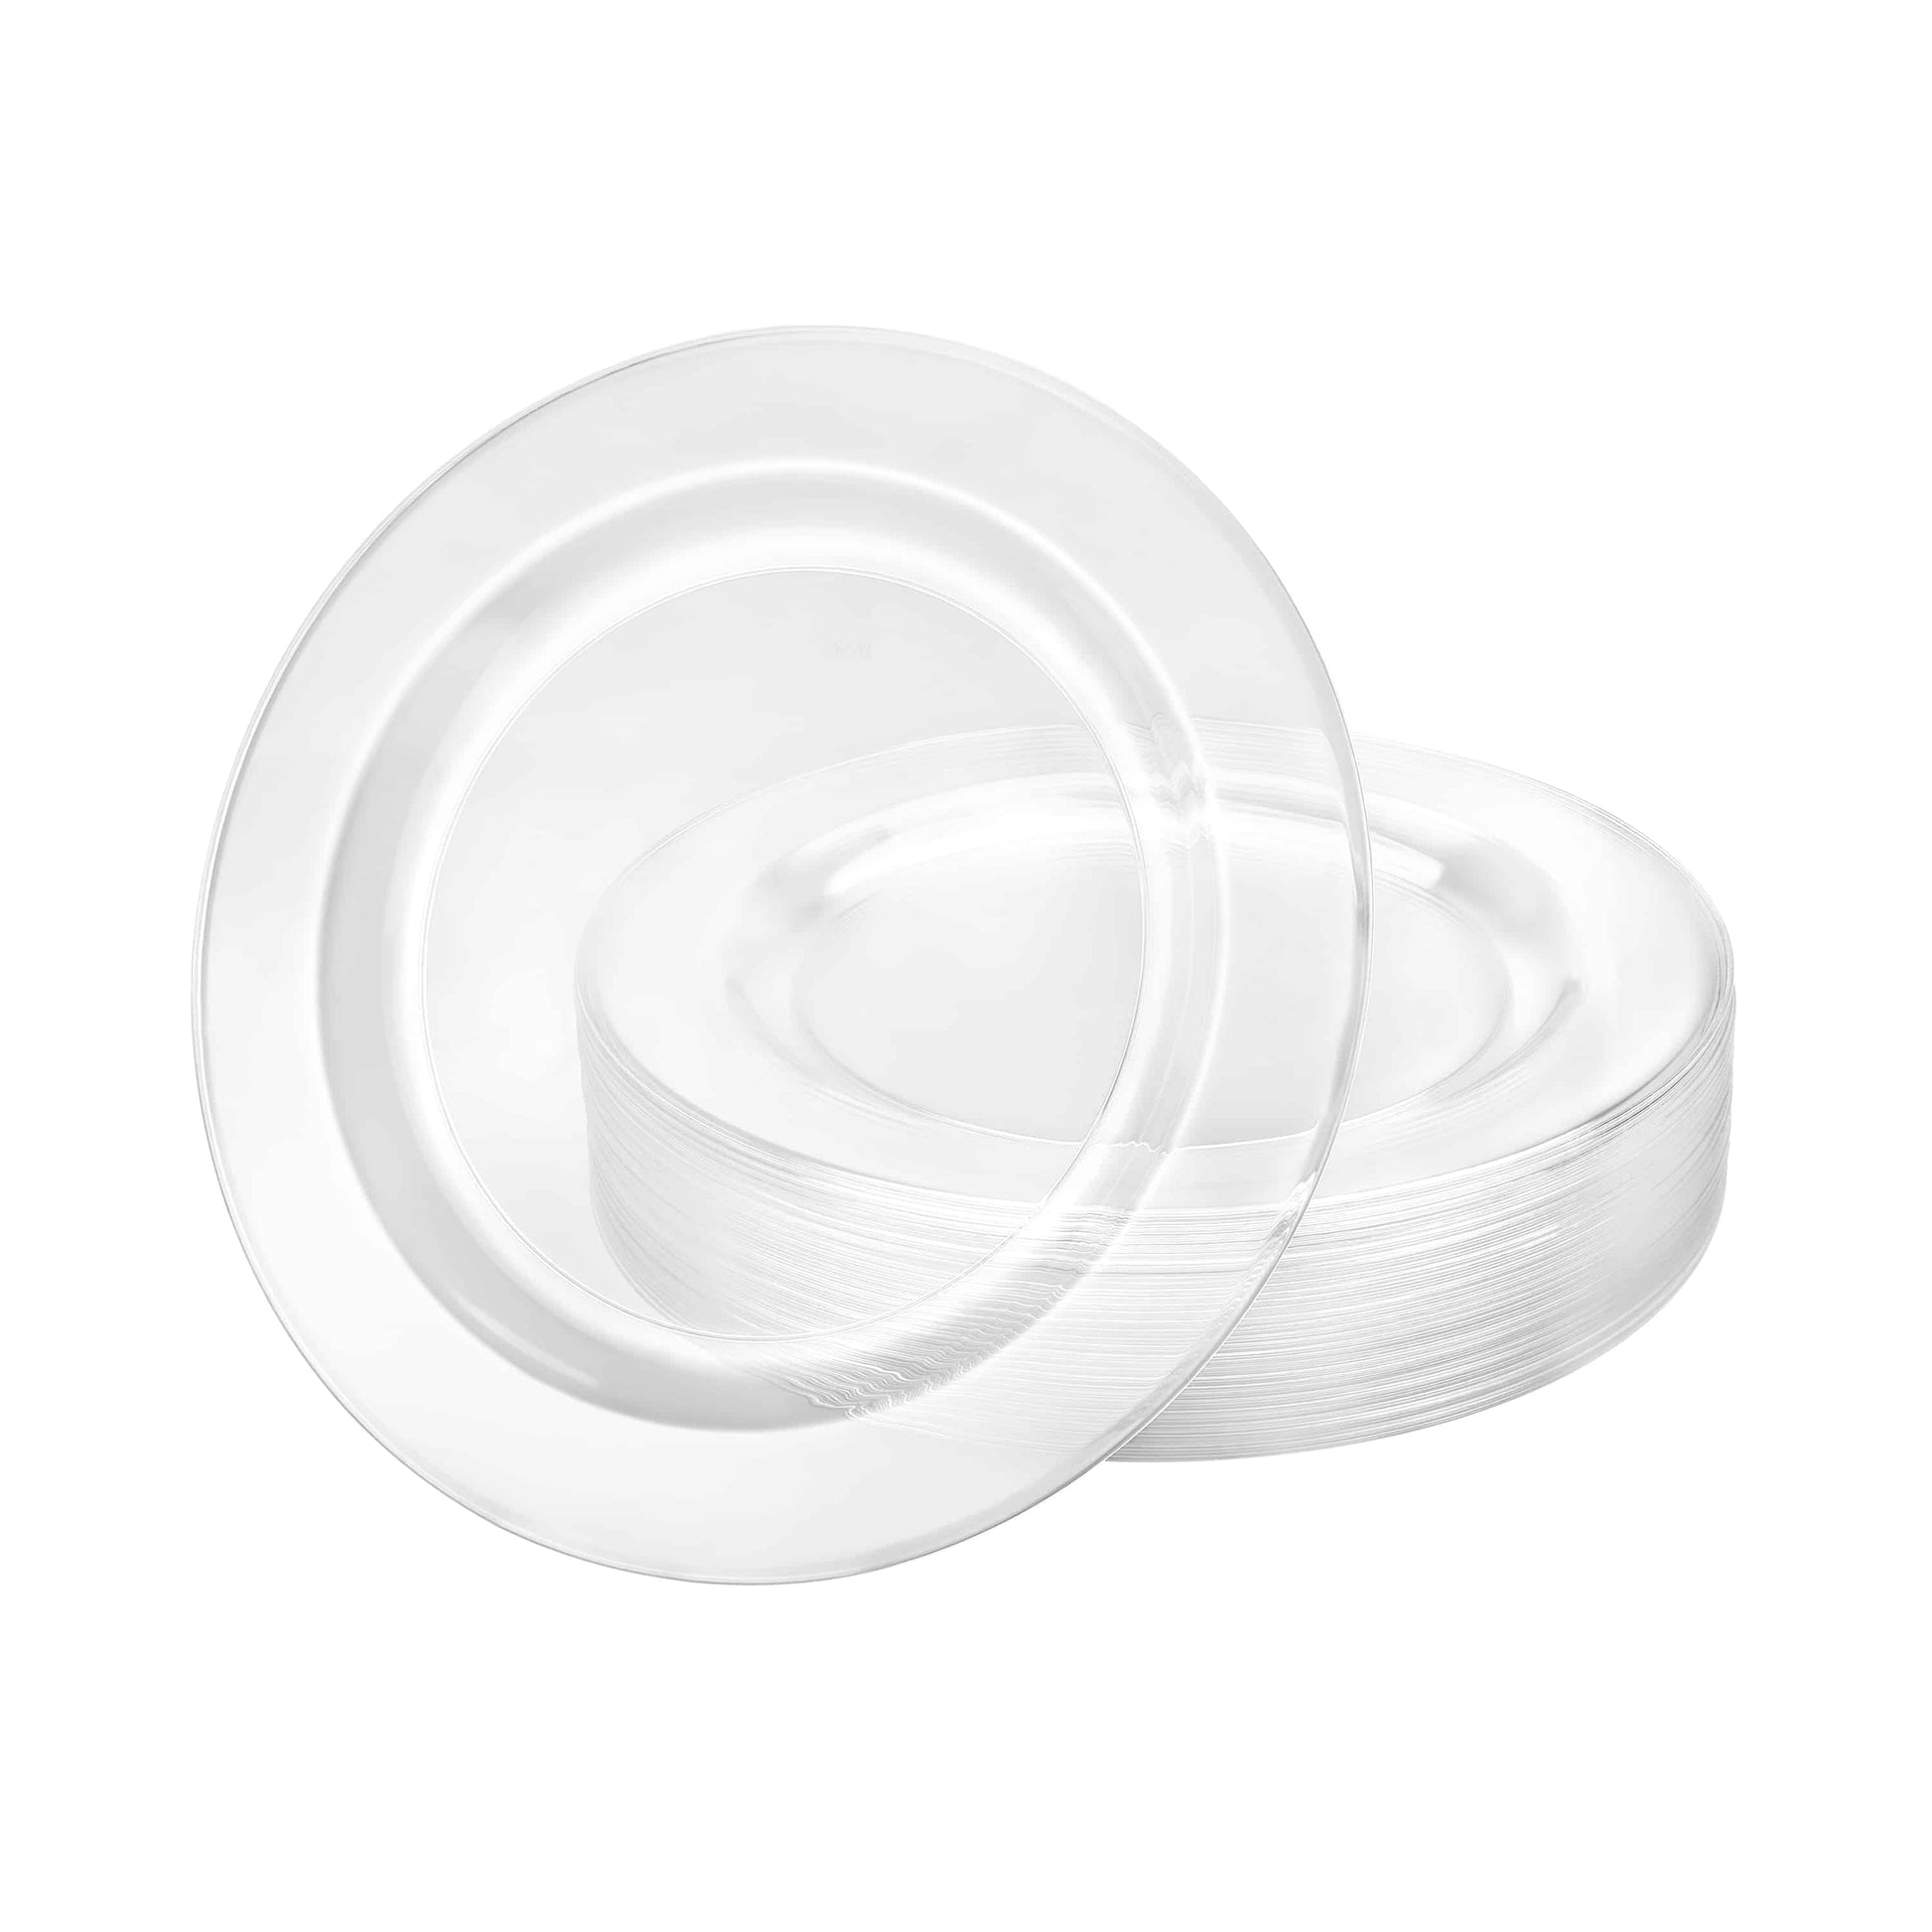 Magnificence Premium Plastic Round Dinnerware - clear plate